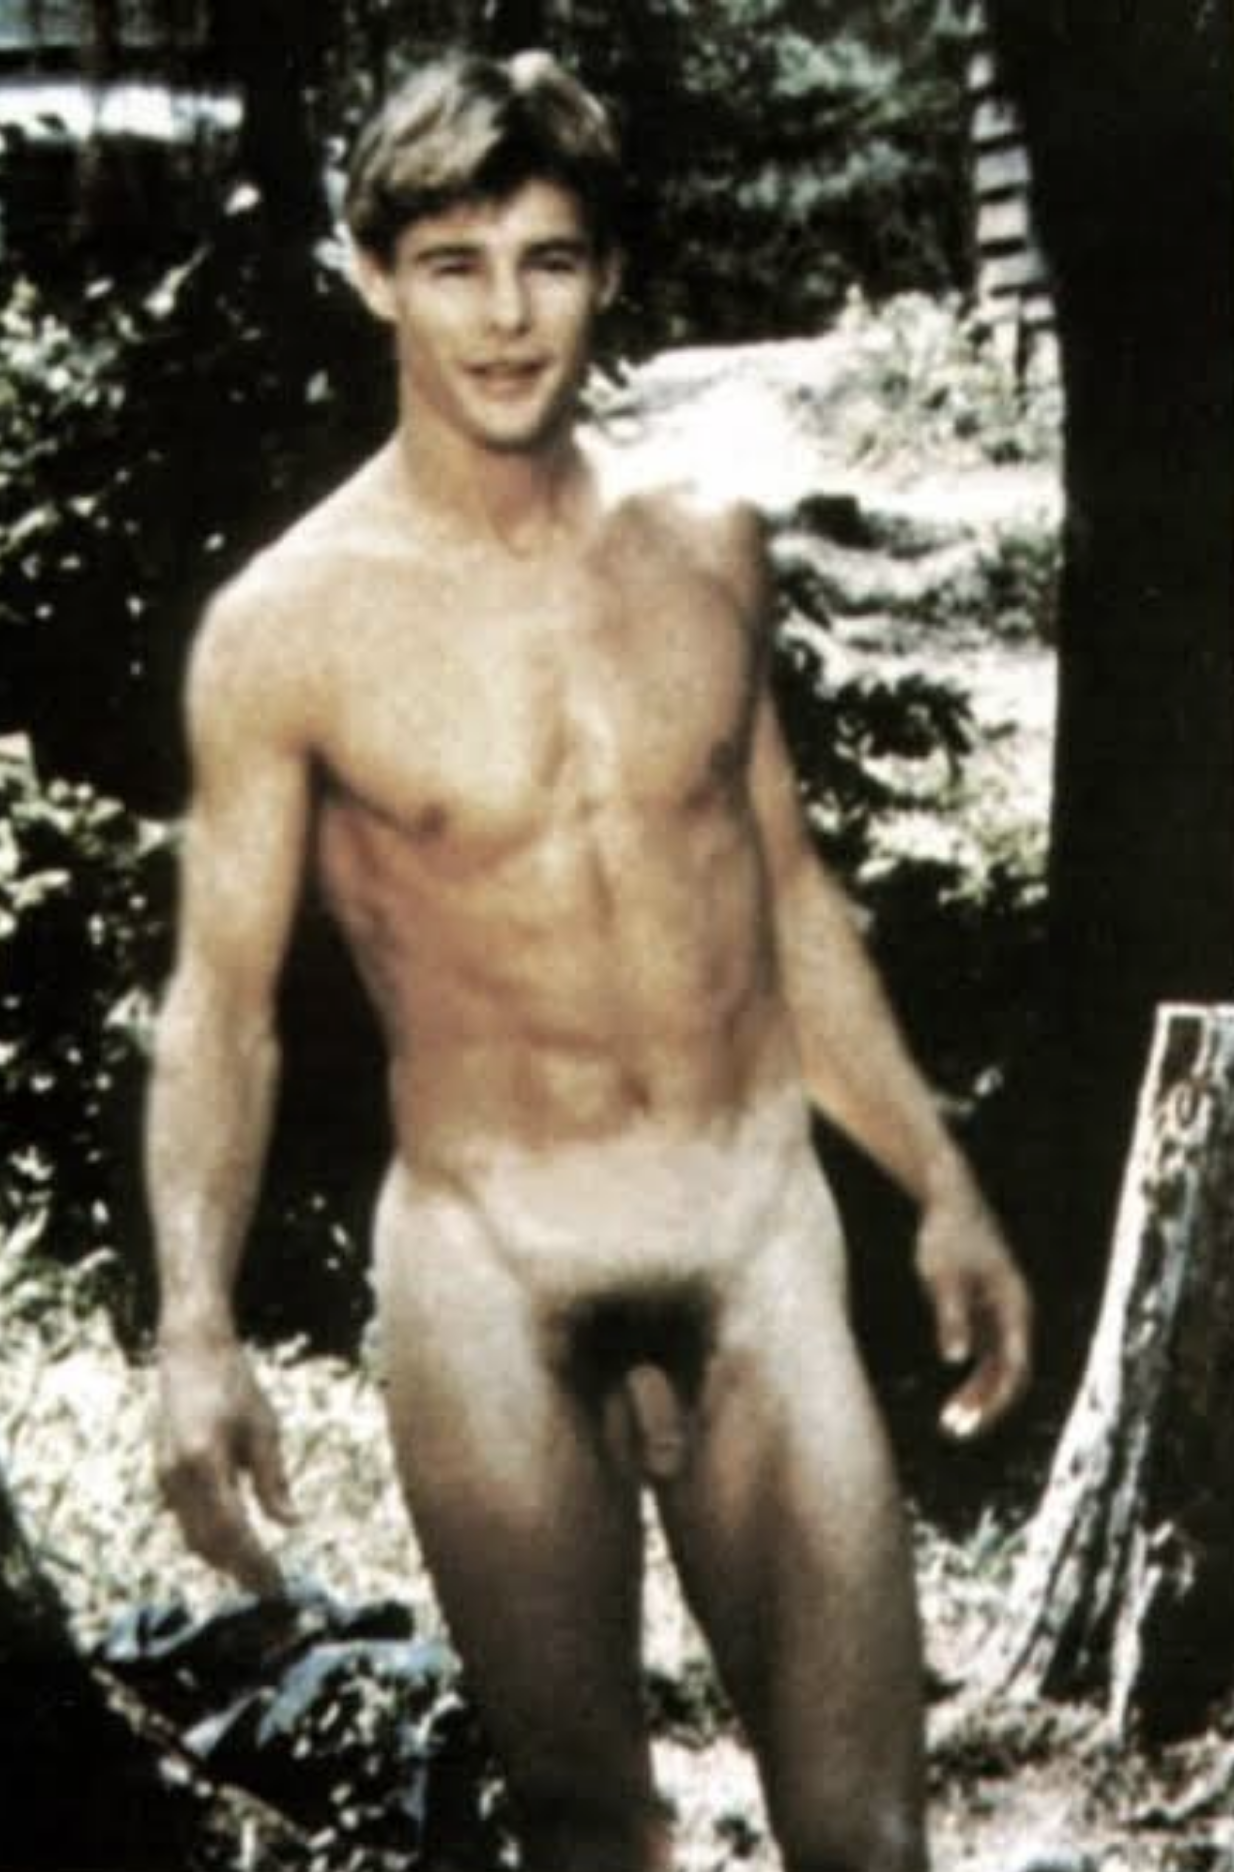 Christopher adkins nude